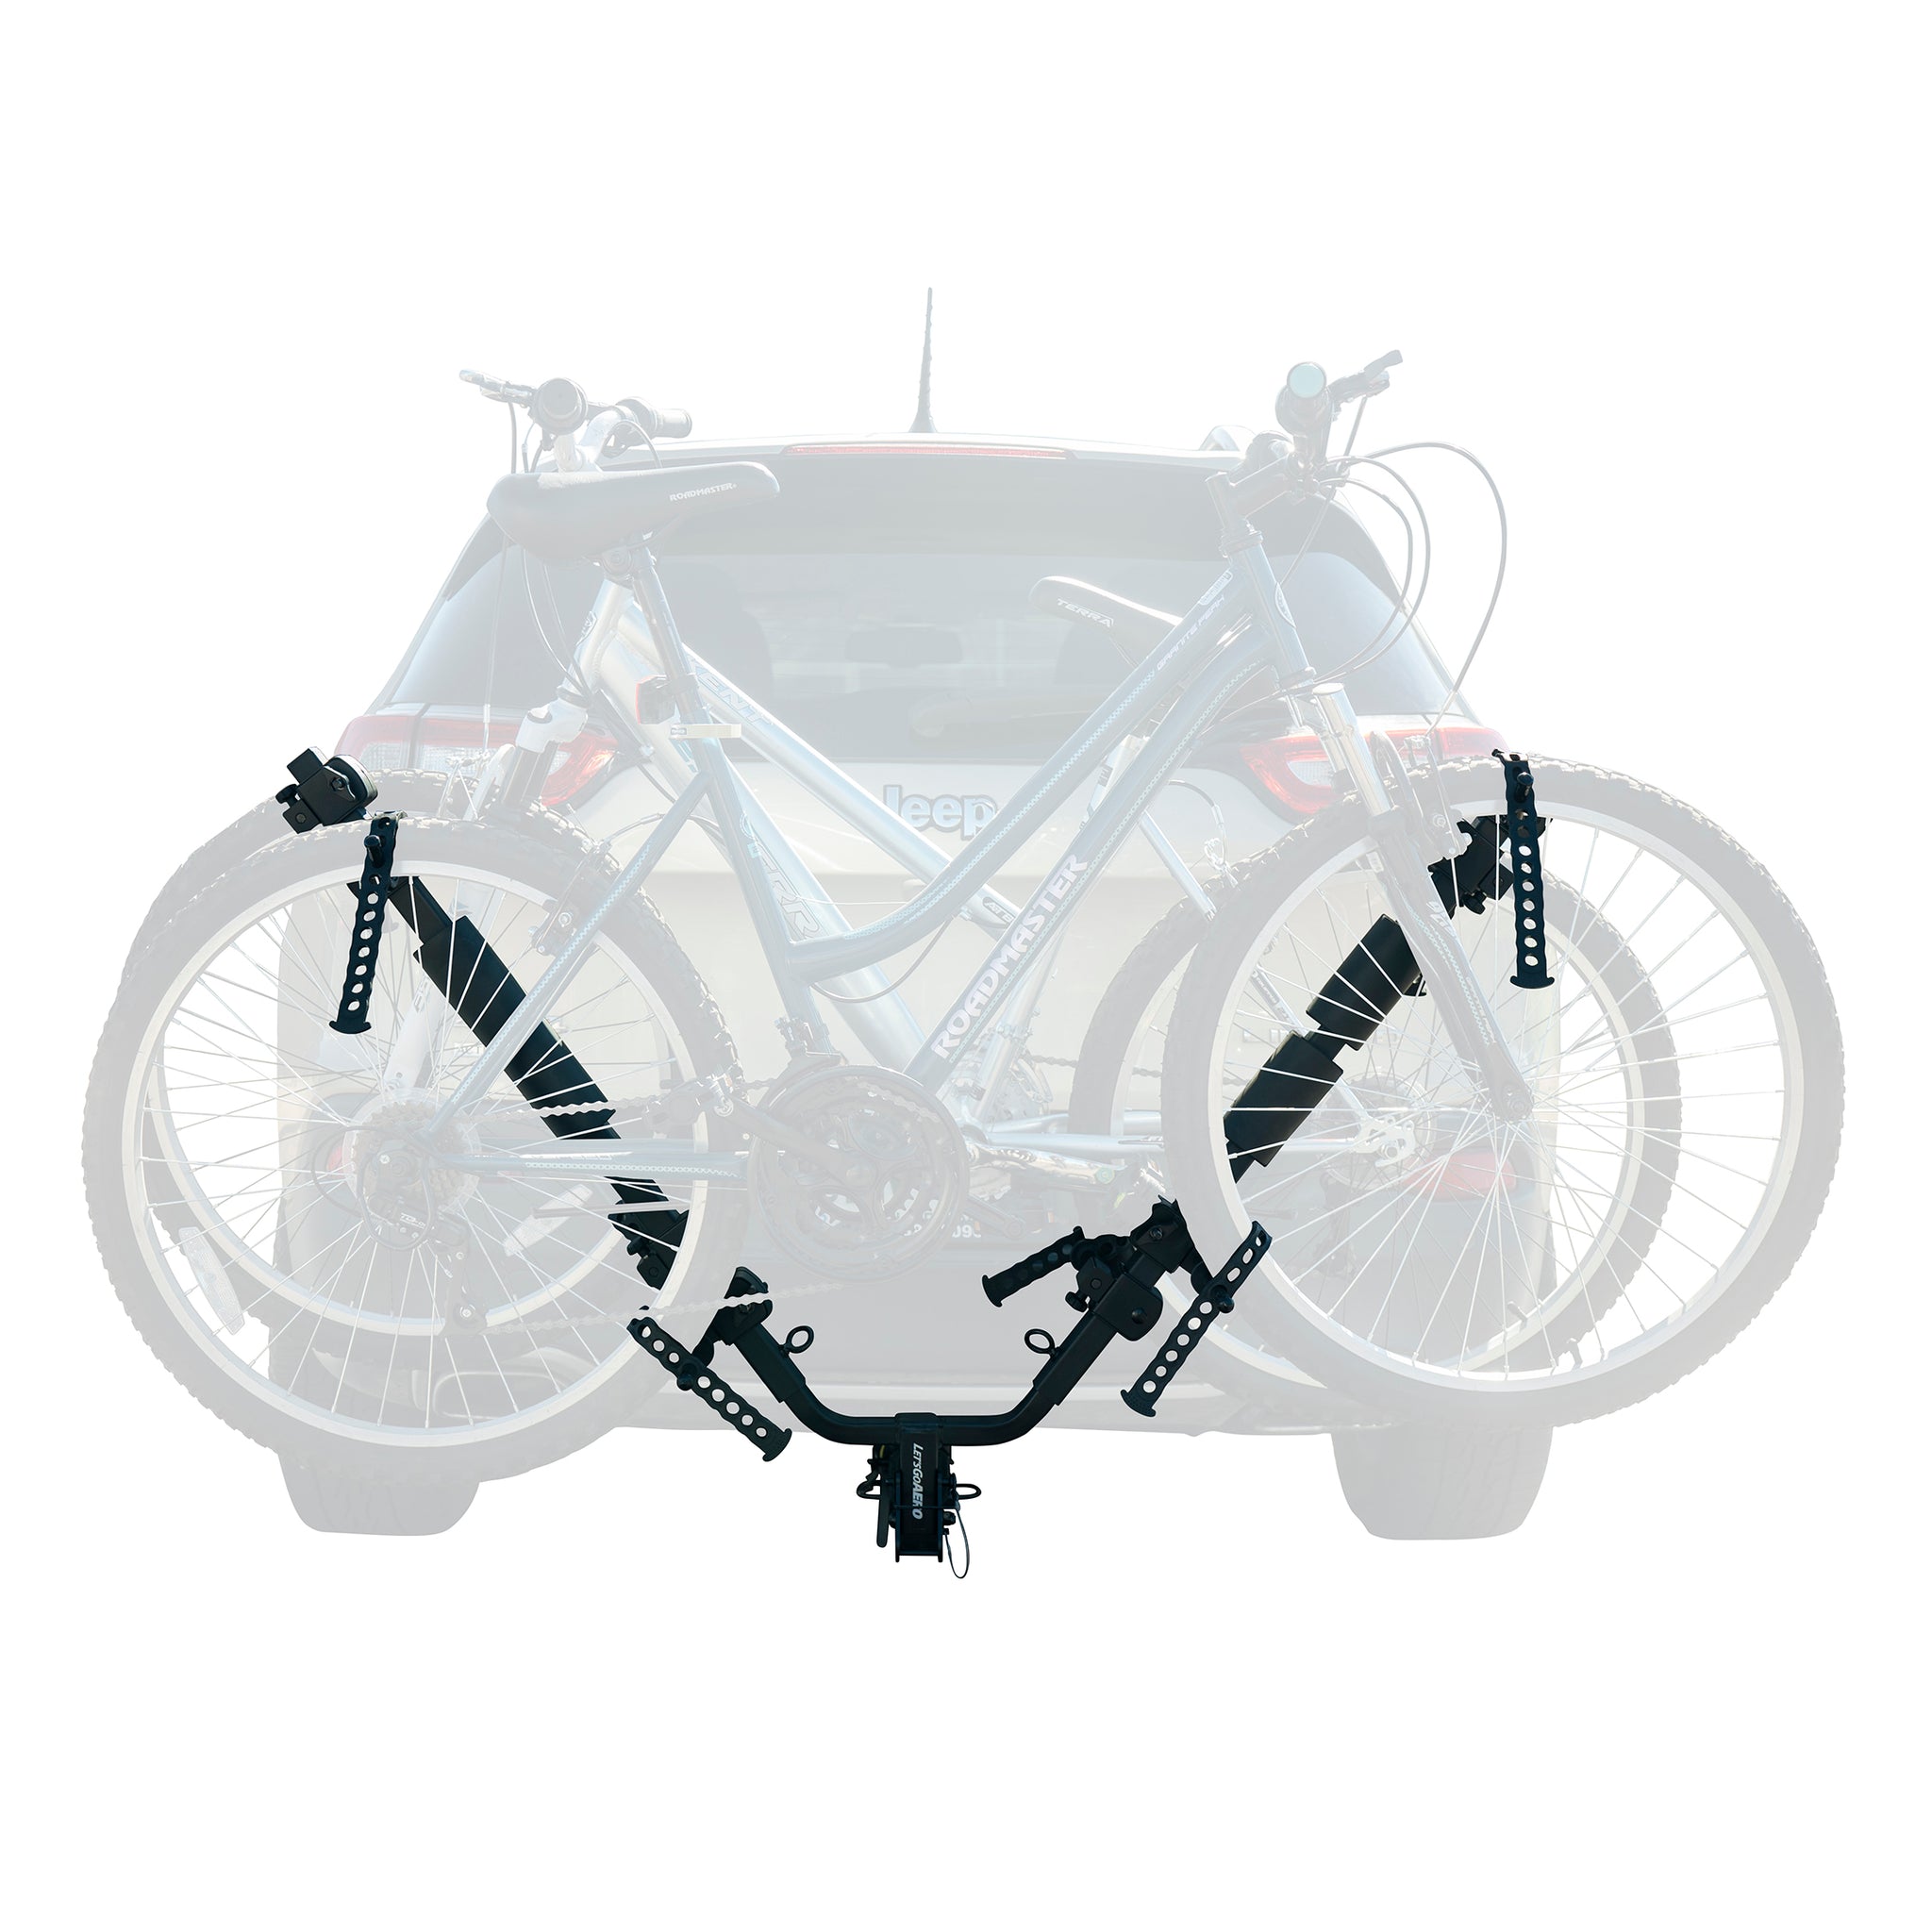 BikeWing-2 PRO Tilting Two Bike Rack